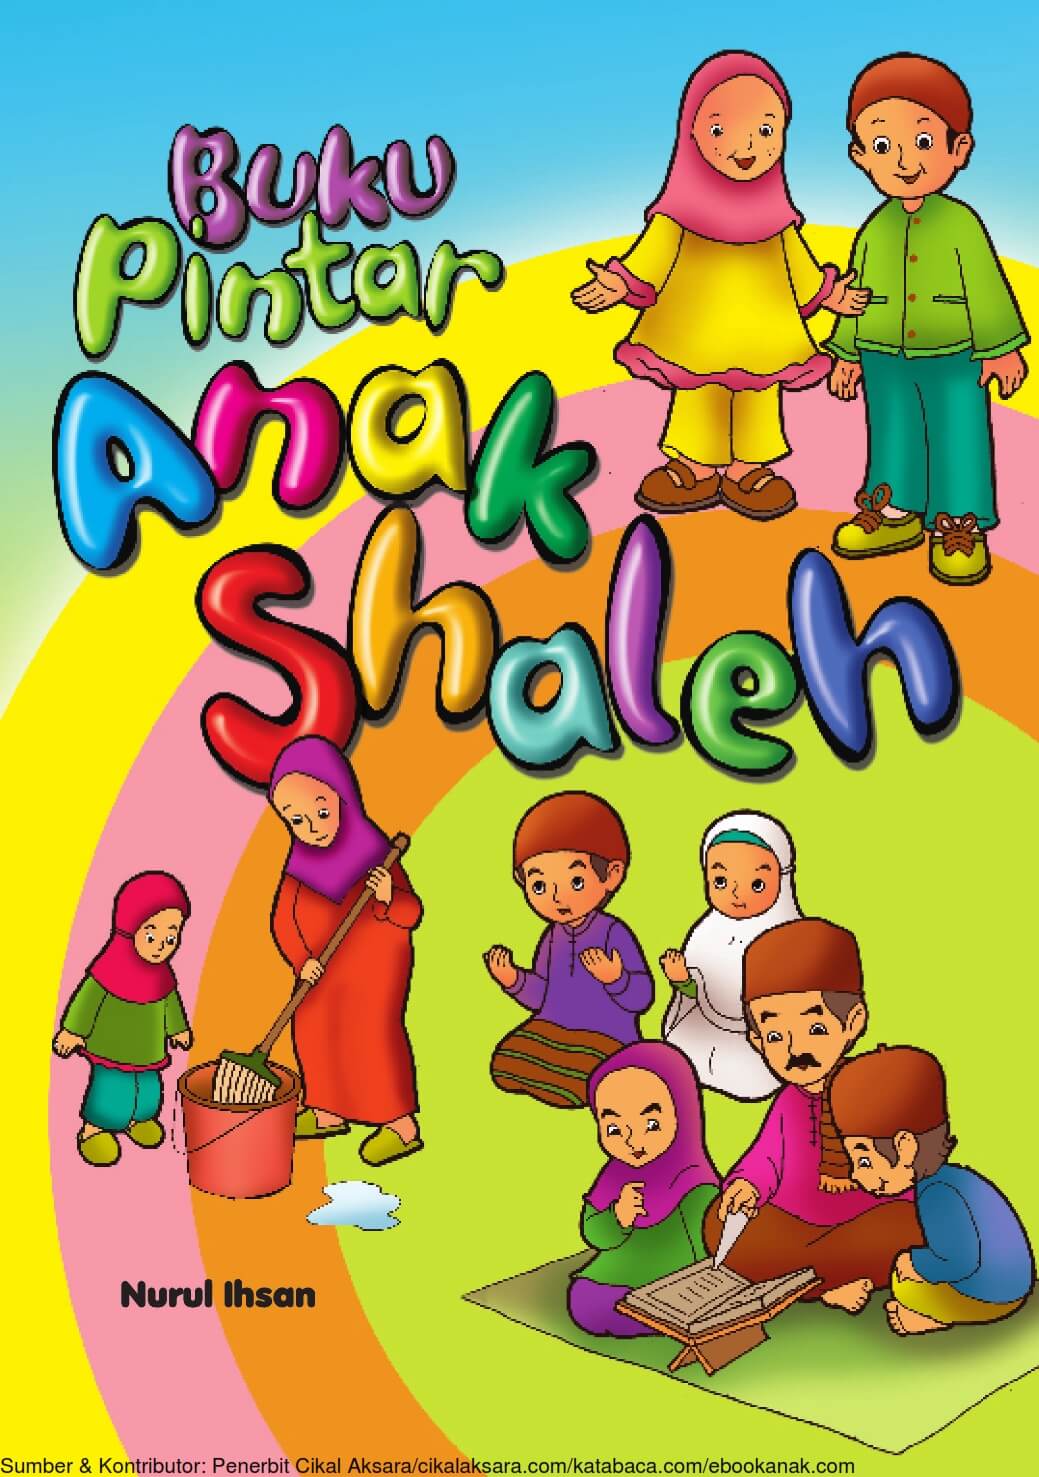 Download full ebook "Buku Pintar Aktivitas Anak Shaleh" karya Kak Nurul Ihsan (ebookanak.com) dengan donasi infaq.